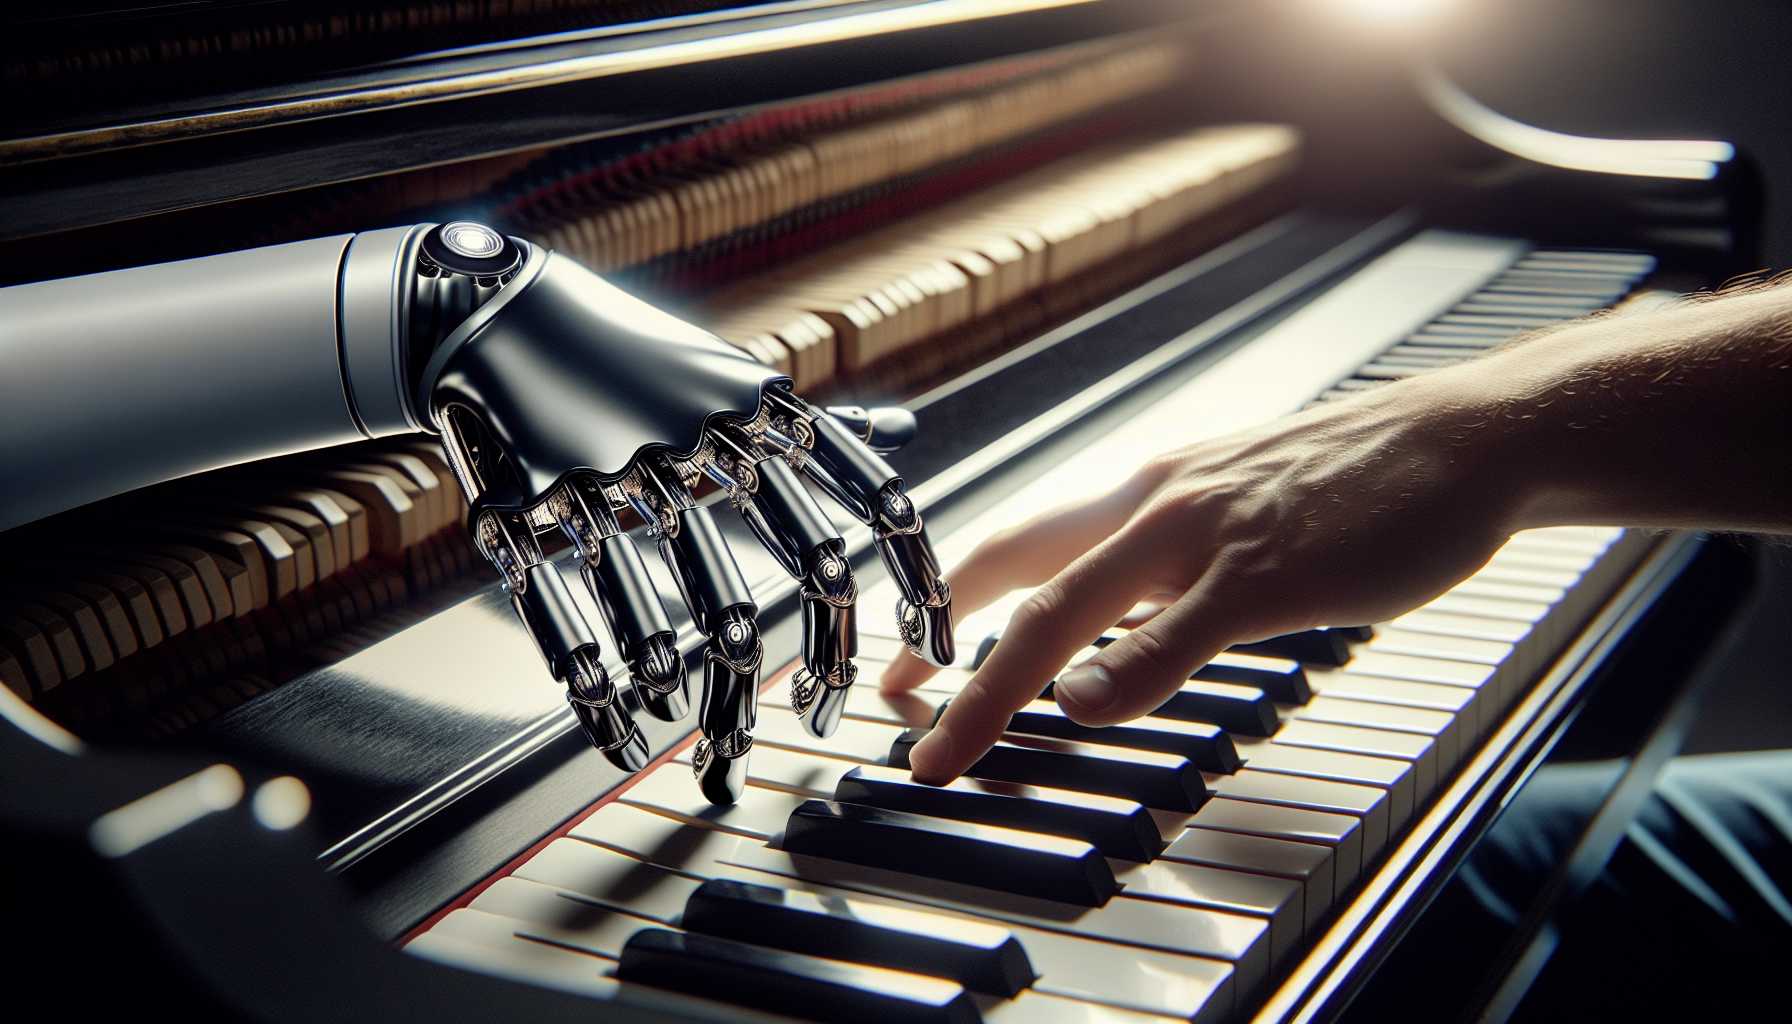 human hand and AI robot hand creating music together on a piano